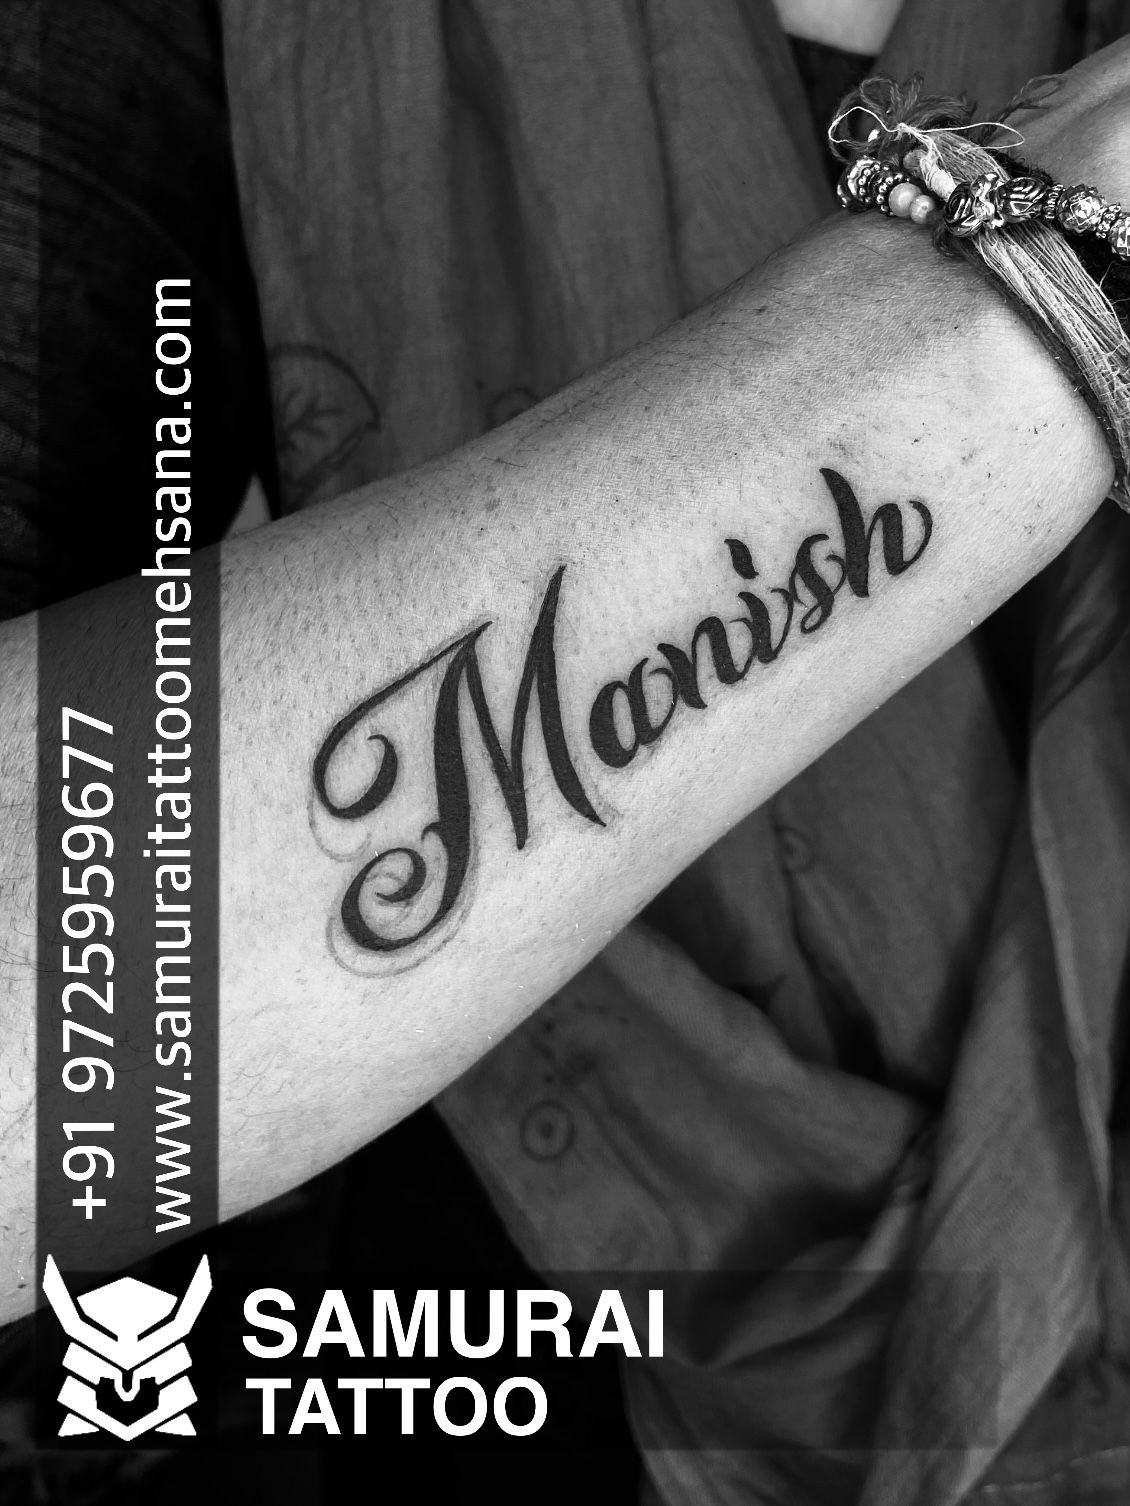 Tattoo uploaded by Vipul Chaudhary  Manish name tattoo Manish name tattoo  design Manish tattoo  Tattoodo